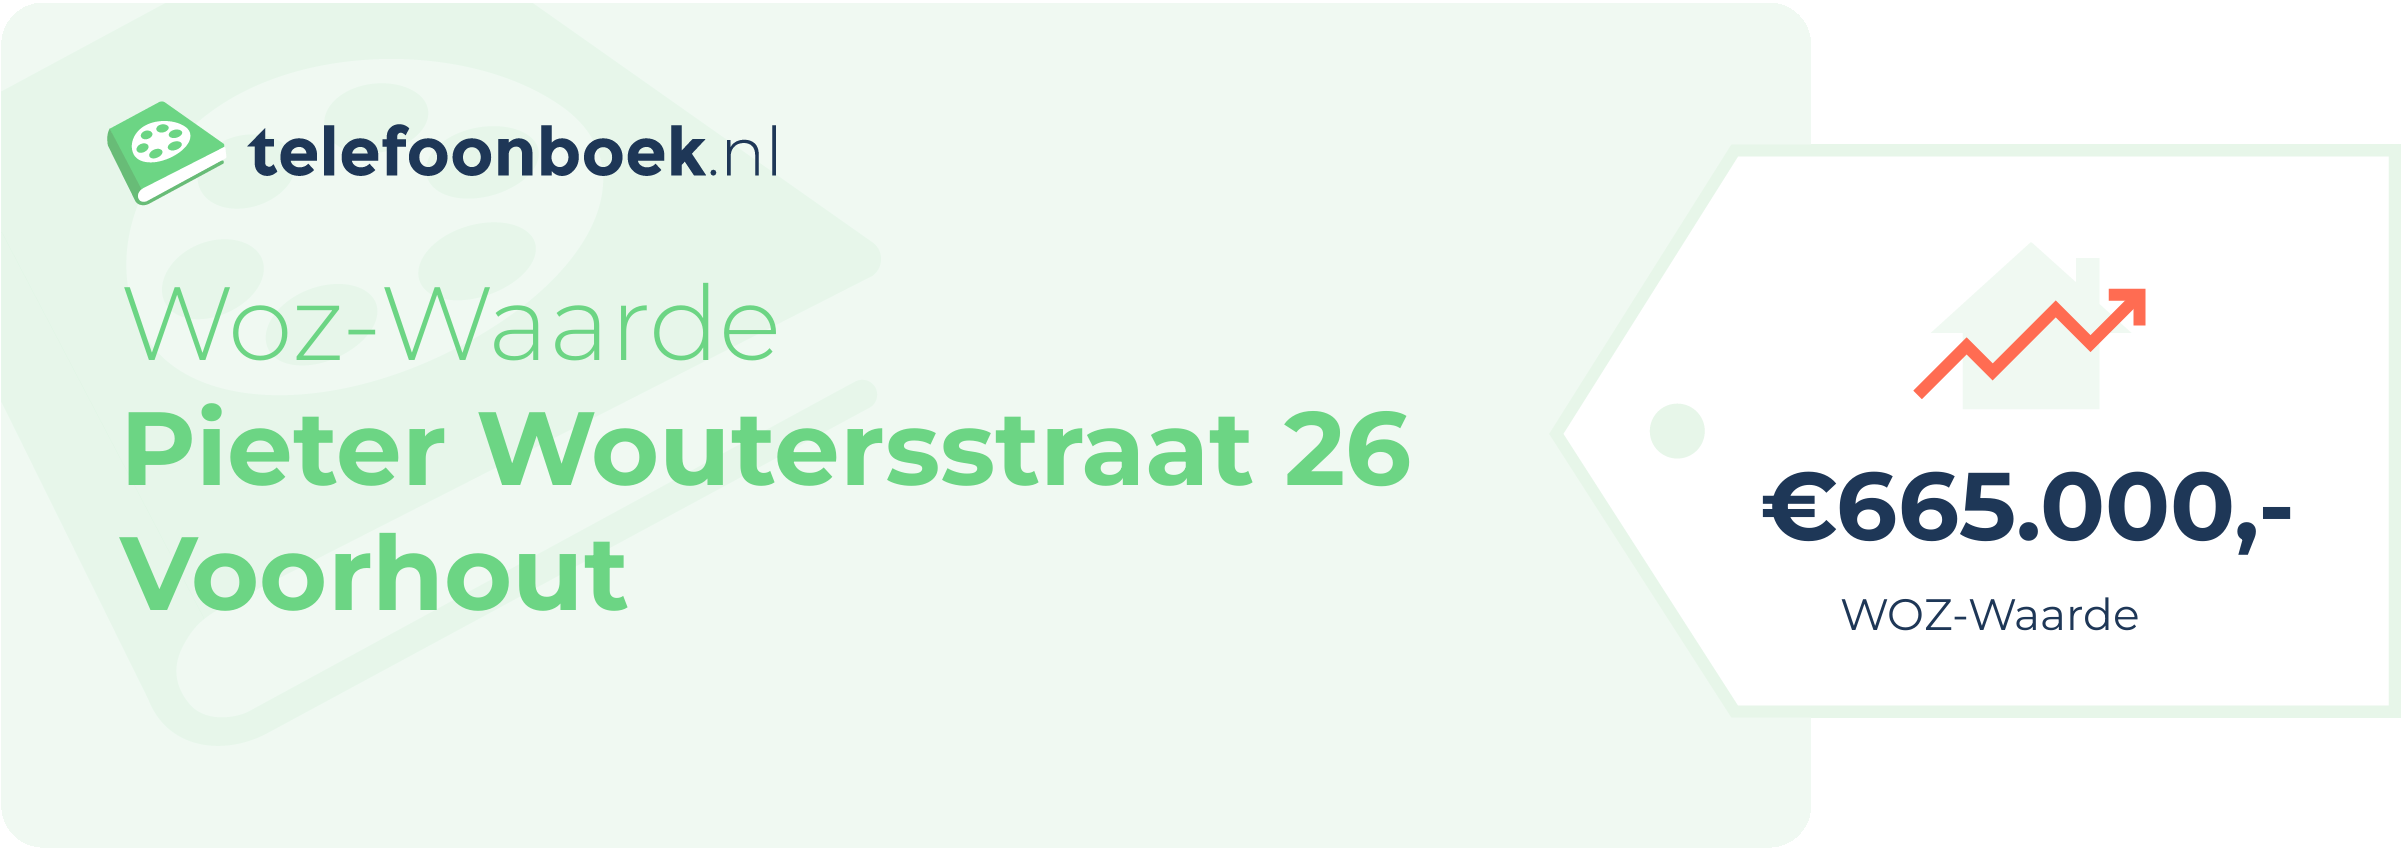 WOZ-waarde Pieter Woutersstraat 26 Voorhout